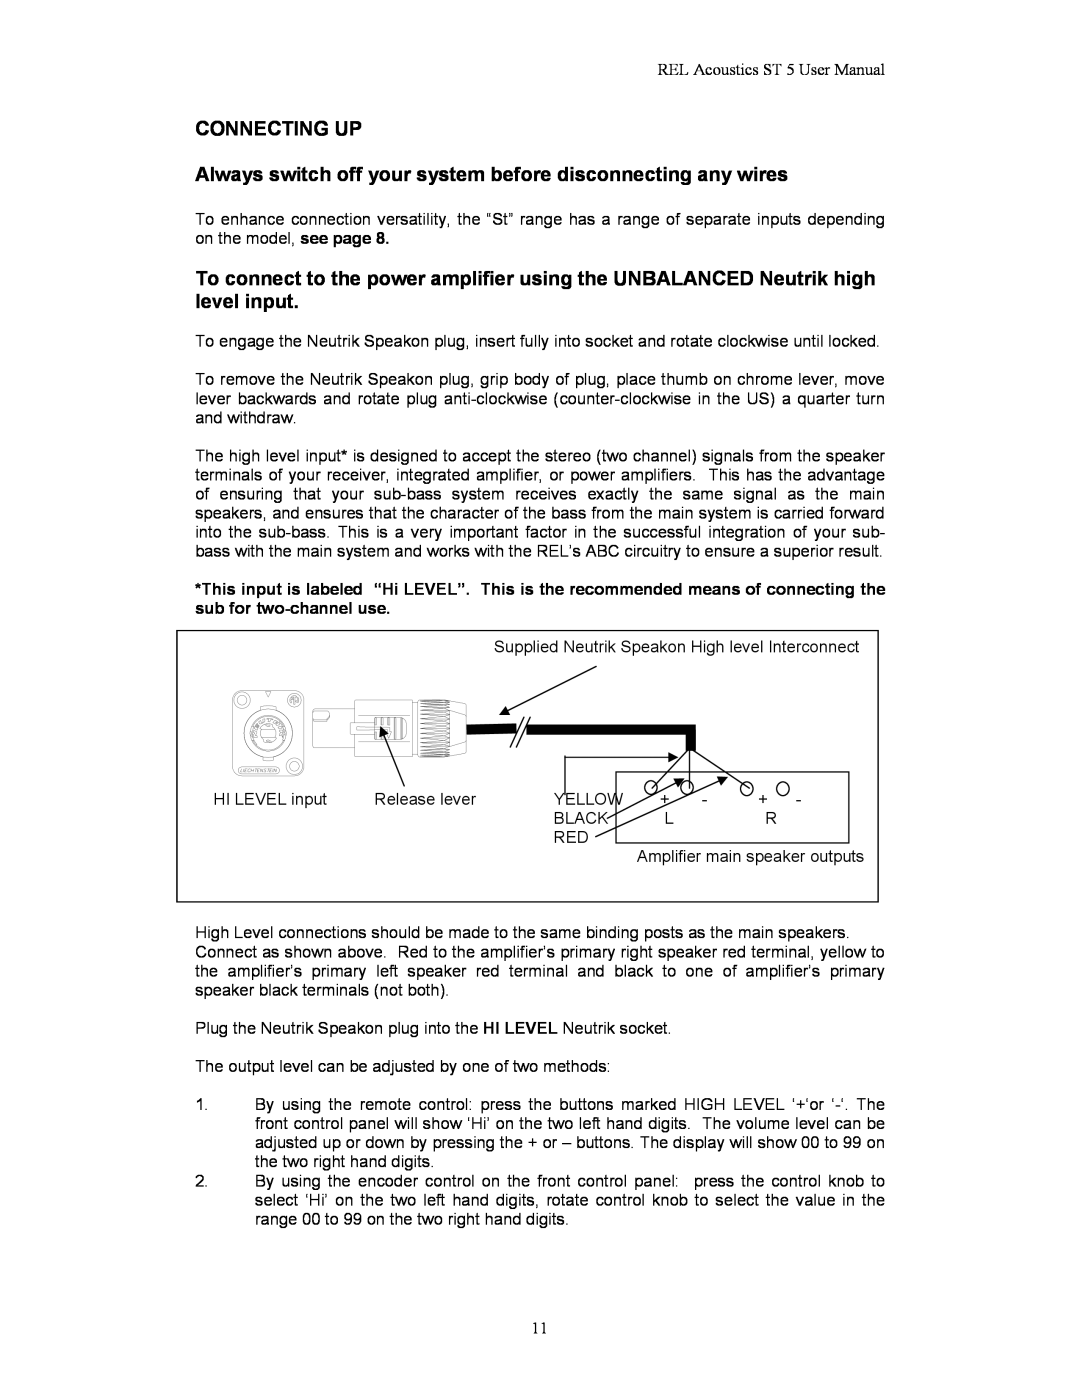 REL Acoustics Stampede, Strata 5 user manual Connecting Up 